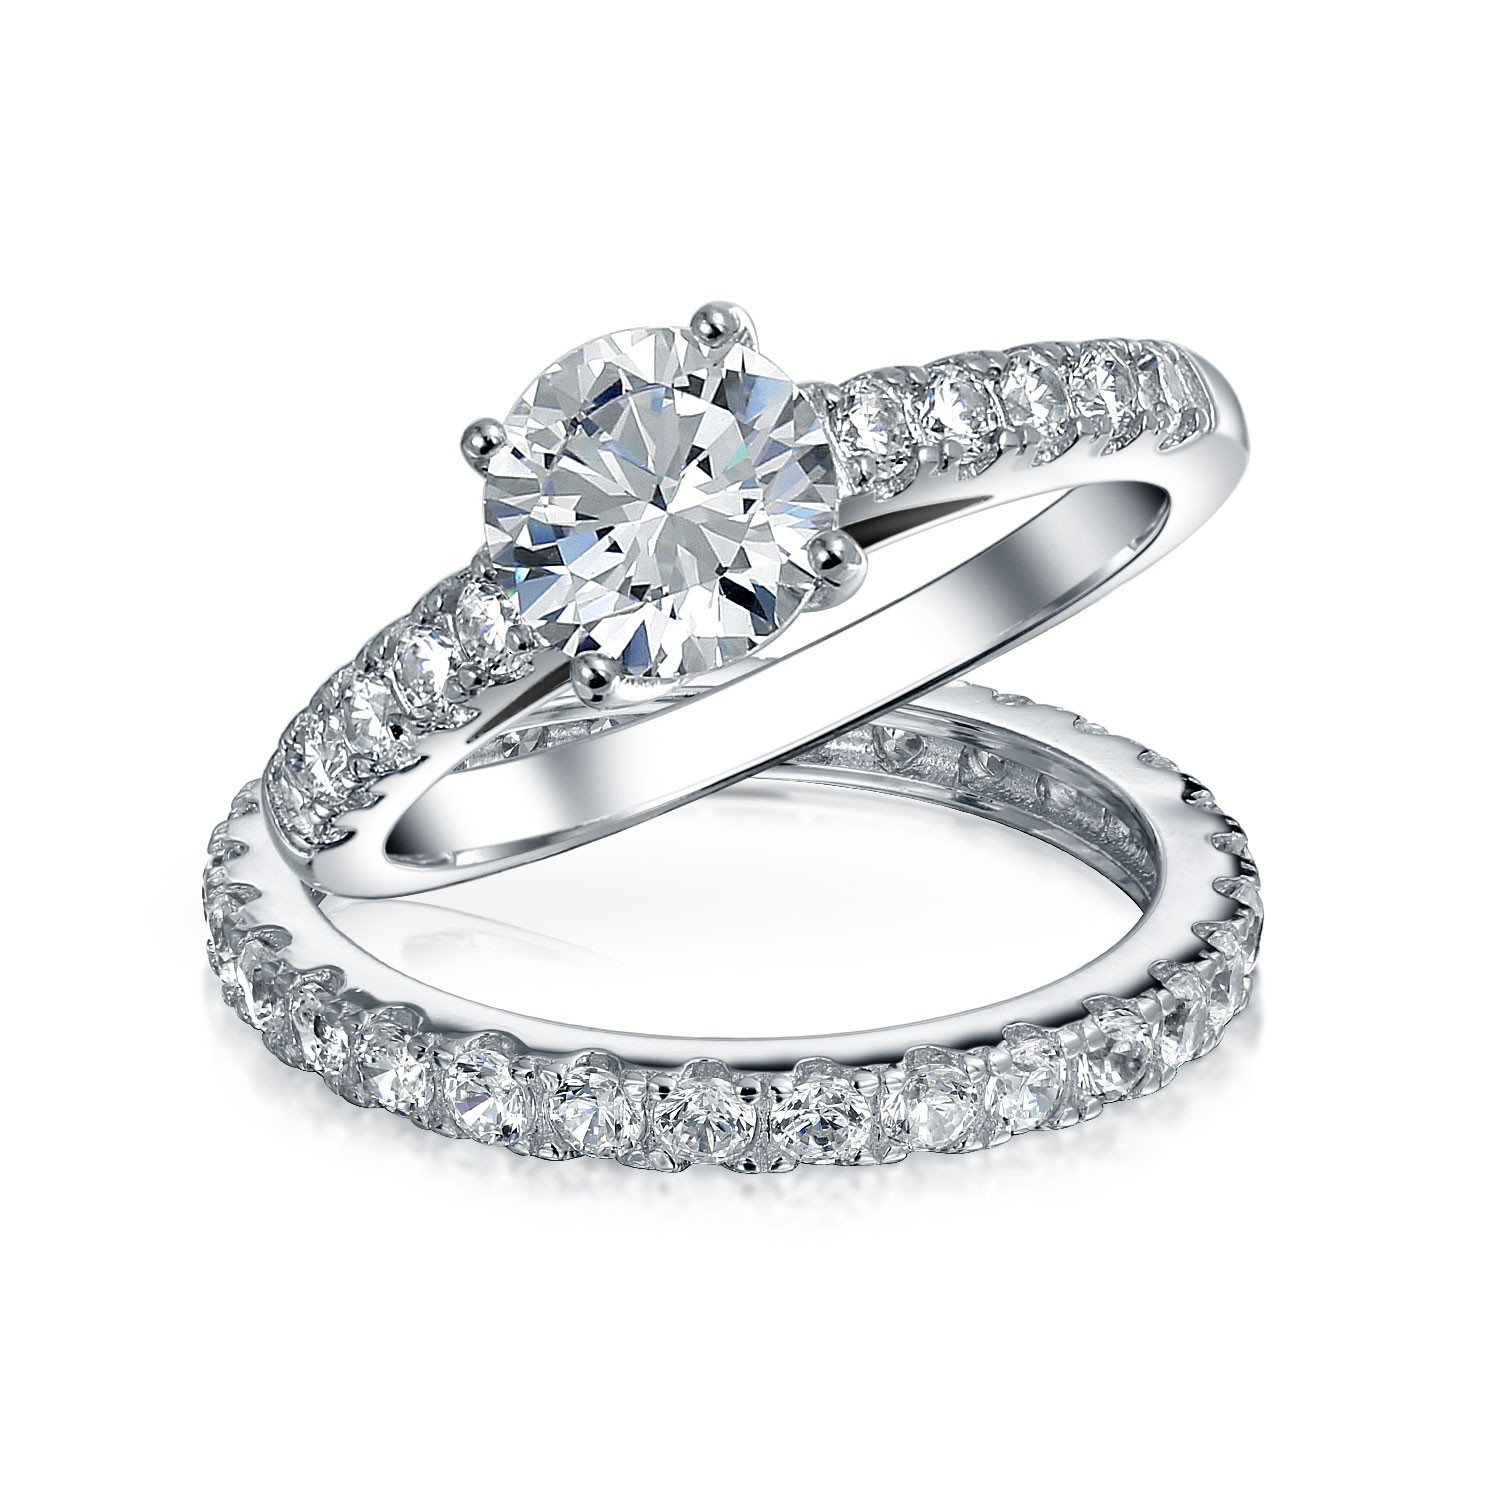 Bridal CZ Solitaire Engagement Wedding Ring Set